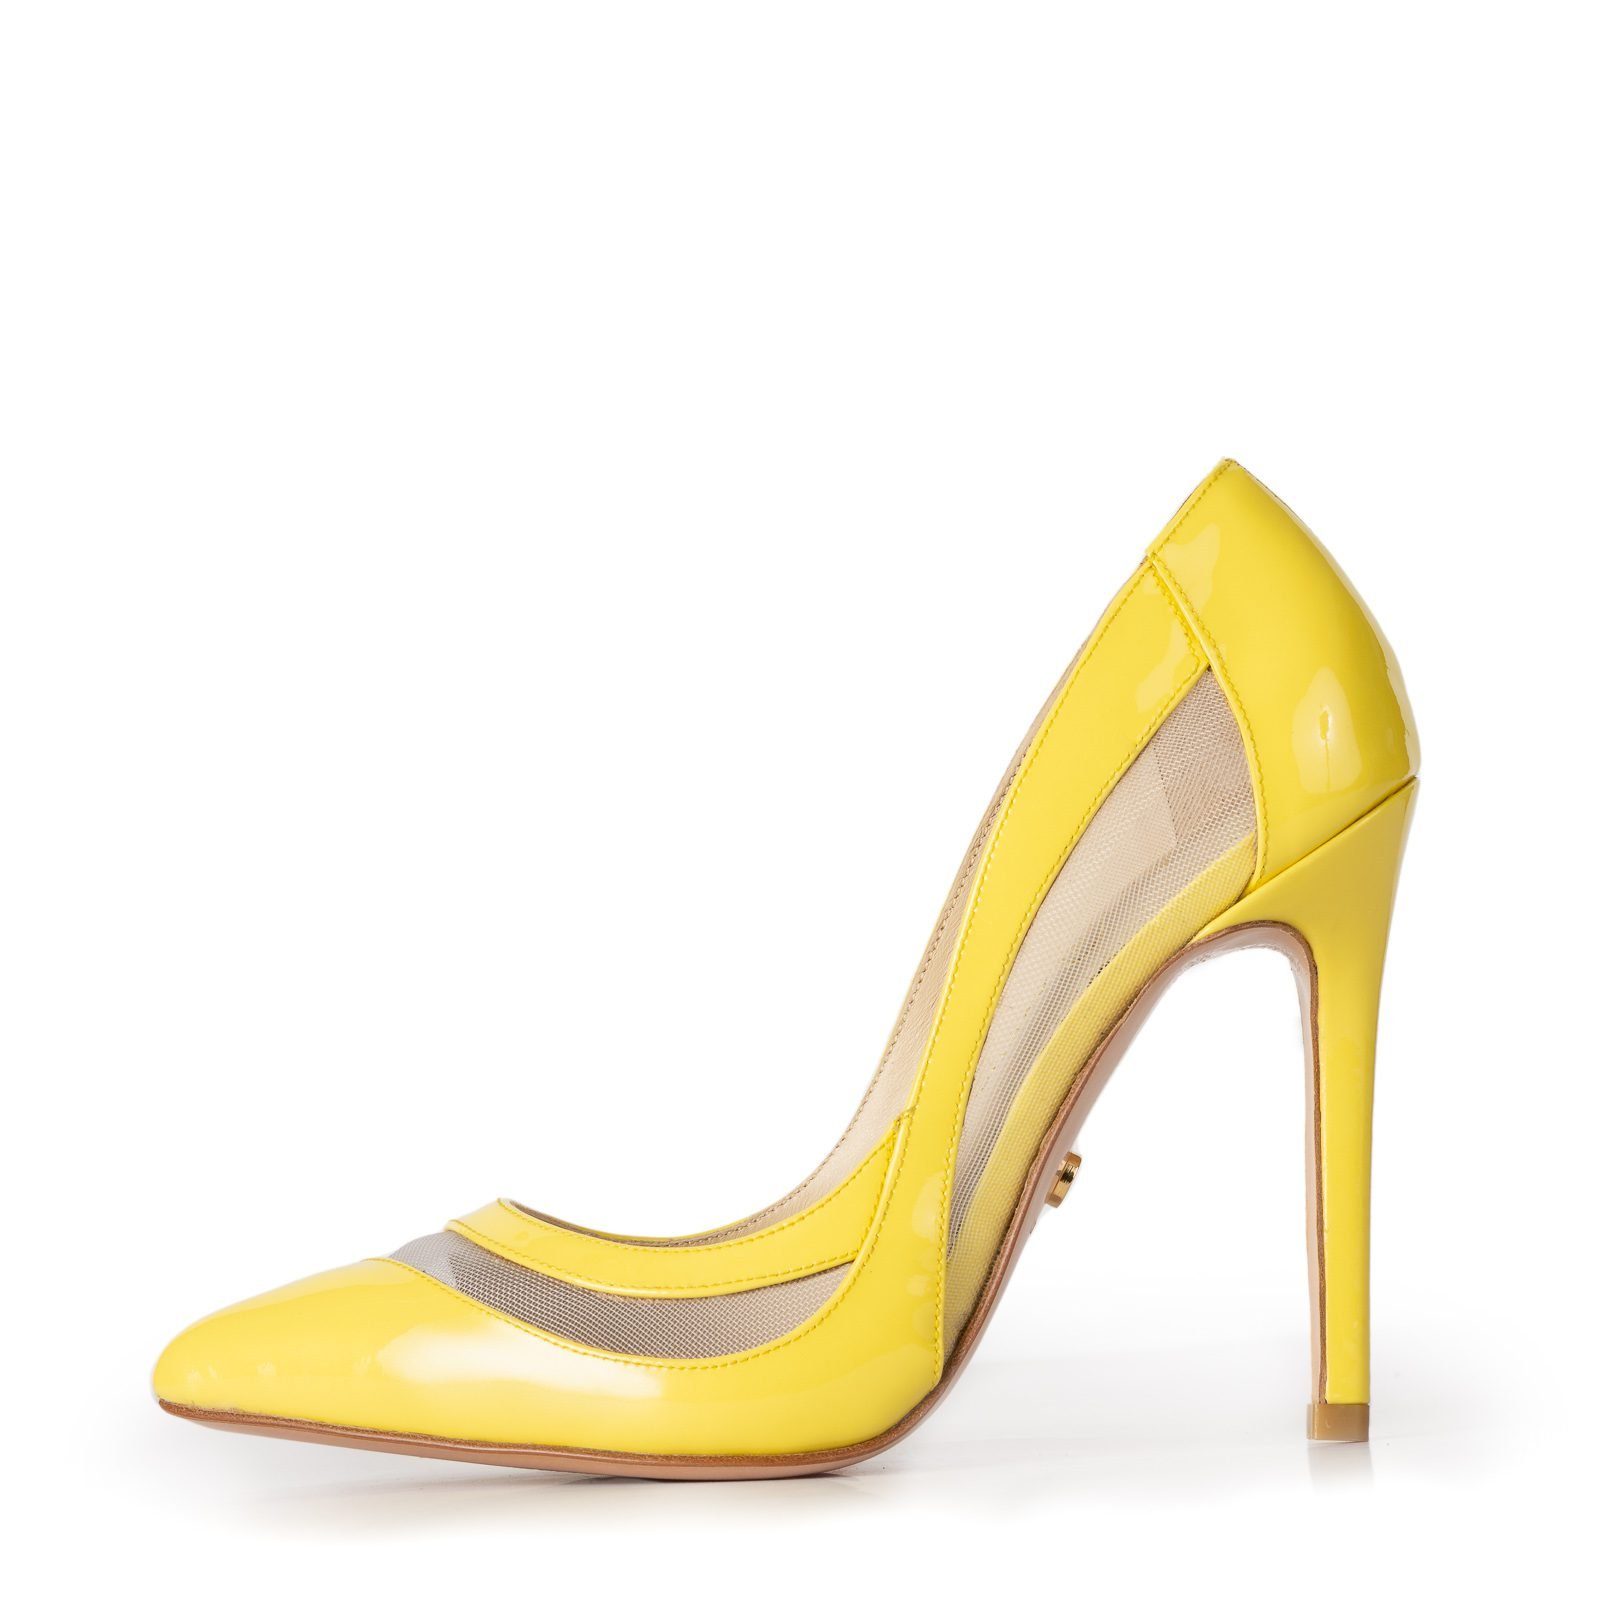 yellow heels with mesh